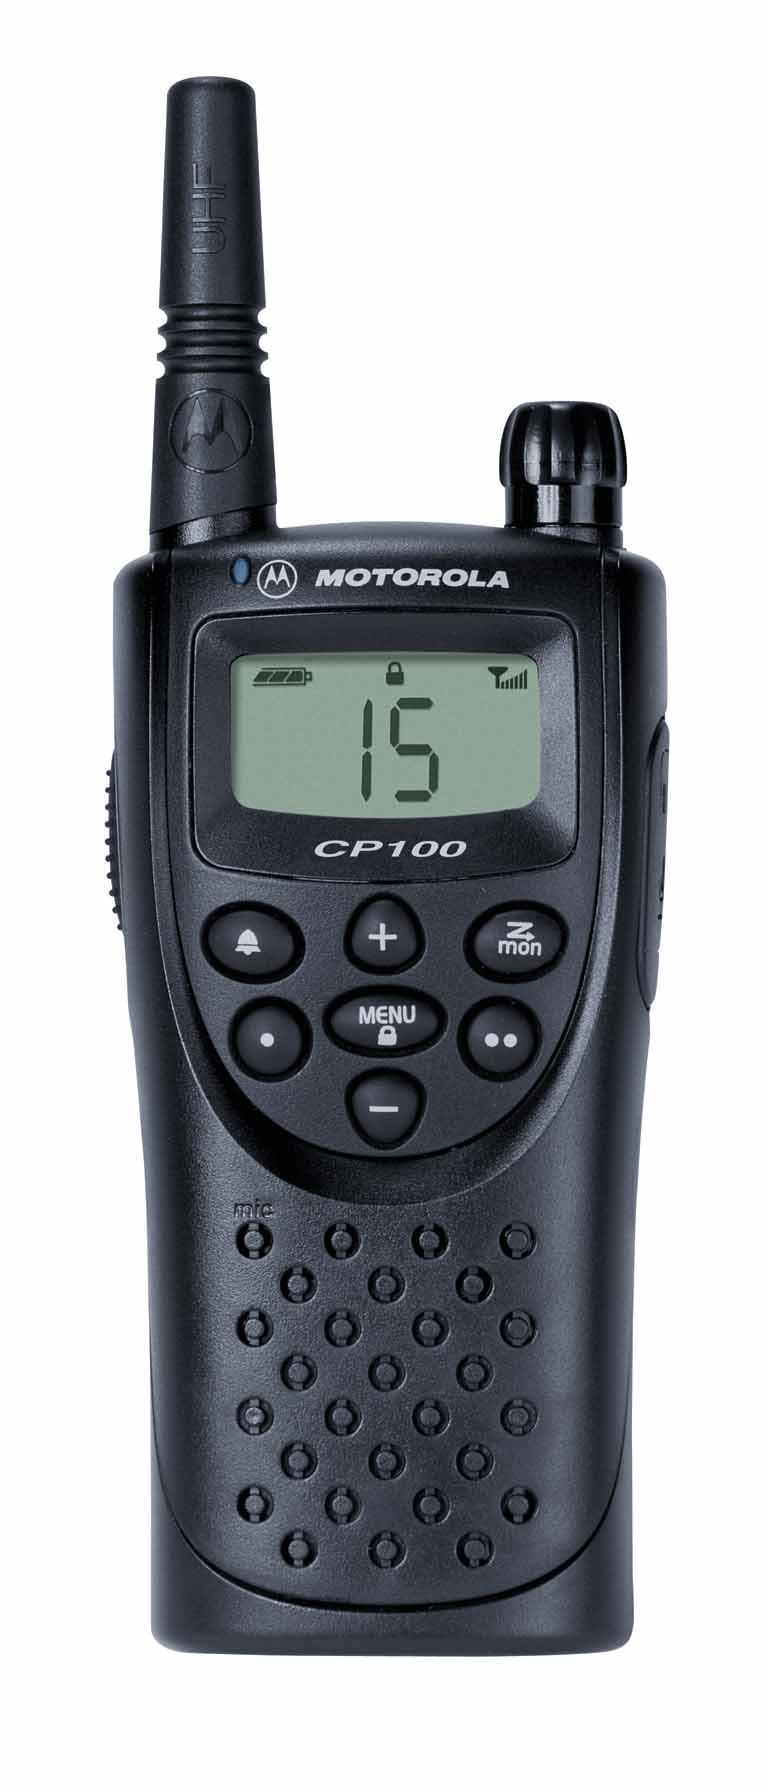 The Motorola CP100 15 channel MURS radio